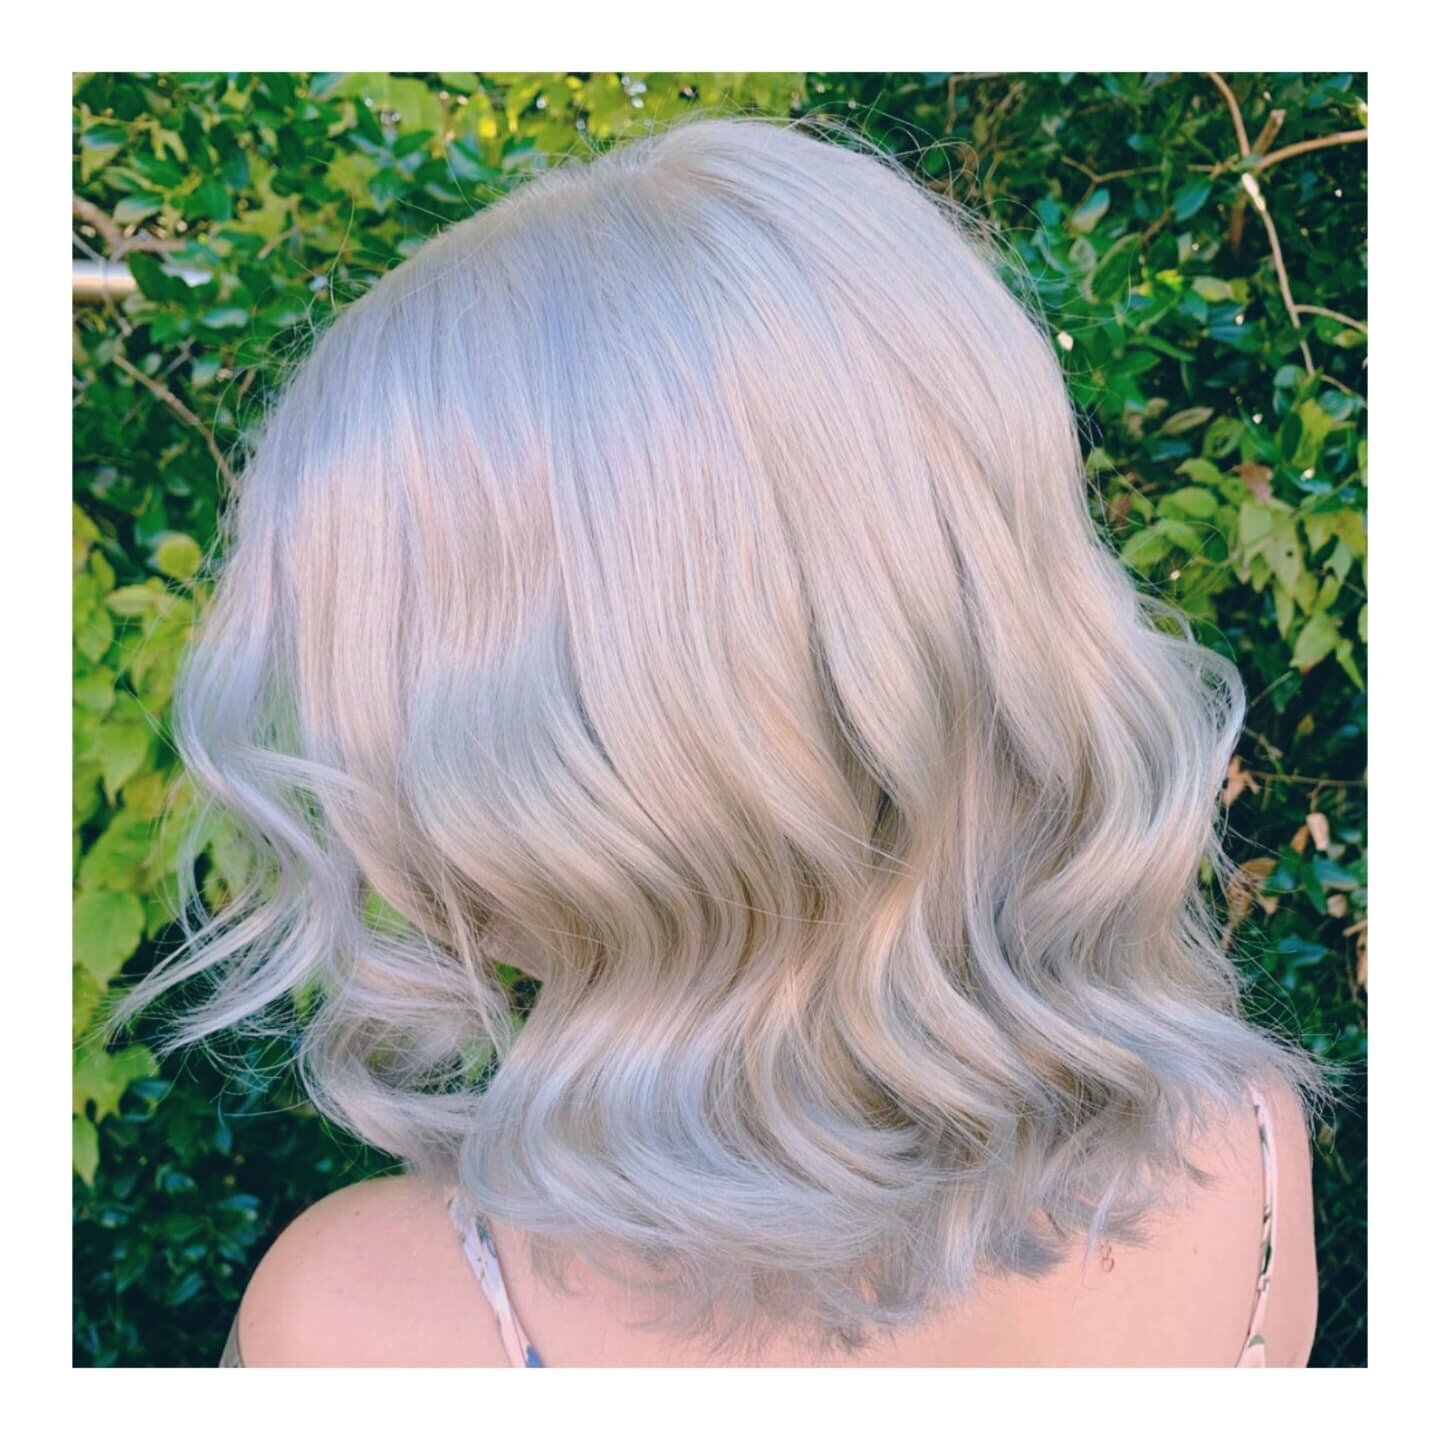 Hair by @wickedstylist.finn 
.
#sprucehair #blondeaf #silver #innersense #blonde #hairsalon #hairtransformation #wavyhair #innersenseorganicbeauty #sulfatefree #hairbrained #durhamnc #bullcity #curly #hairinspo #oligopro #bestofdurham #unc #duke #dur